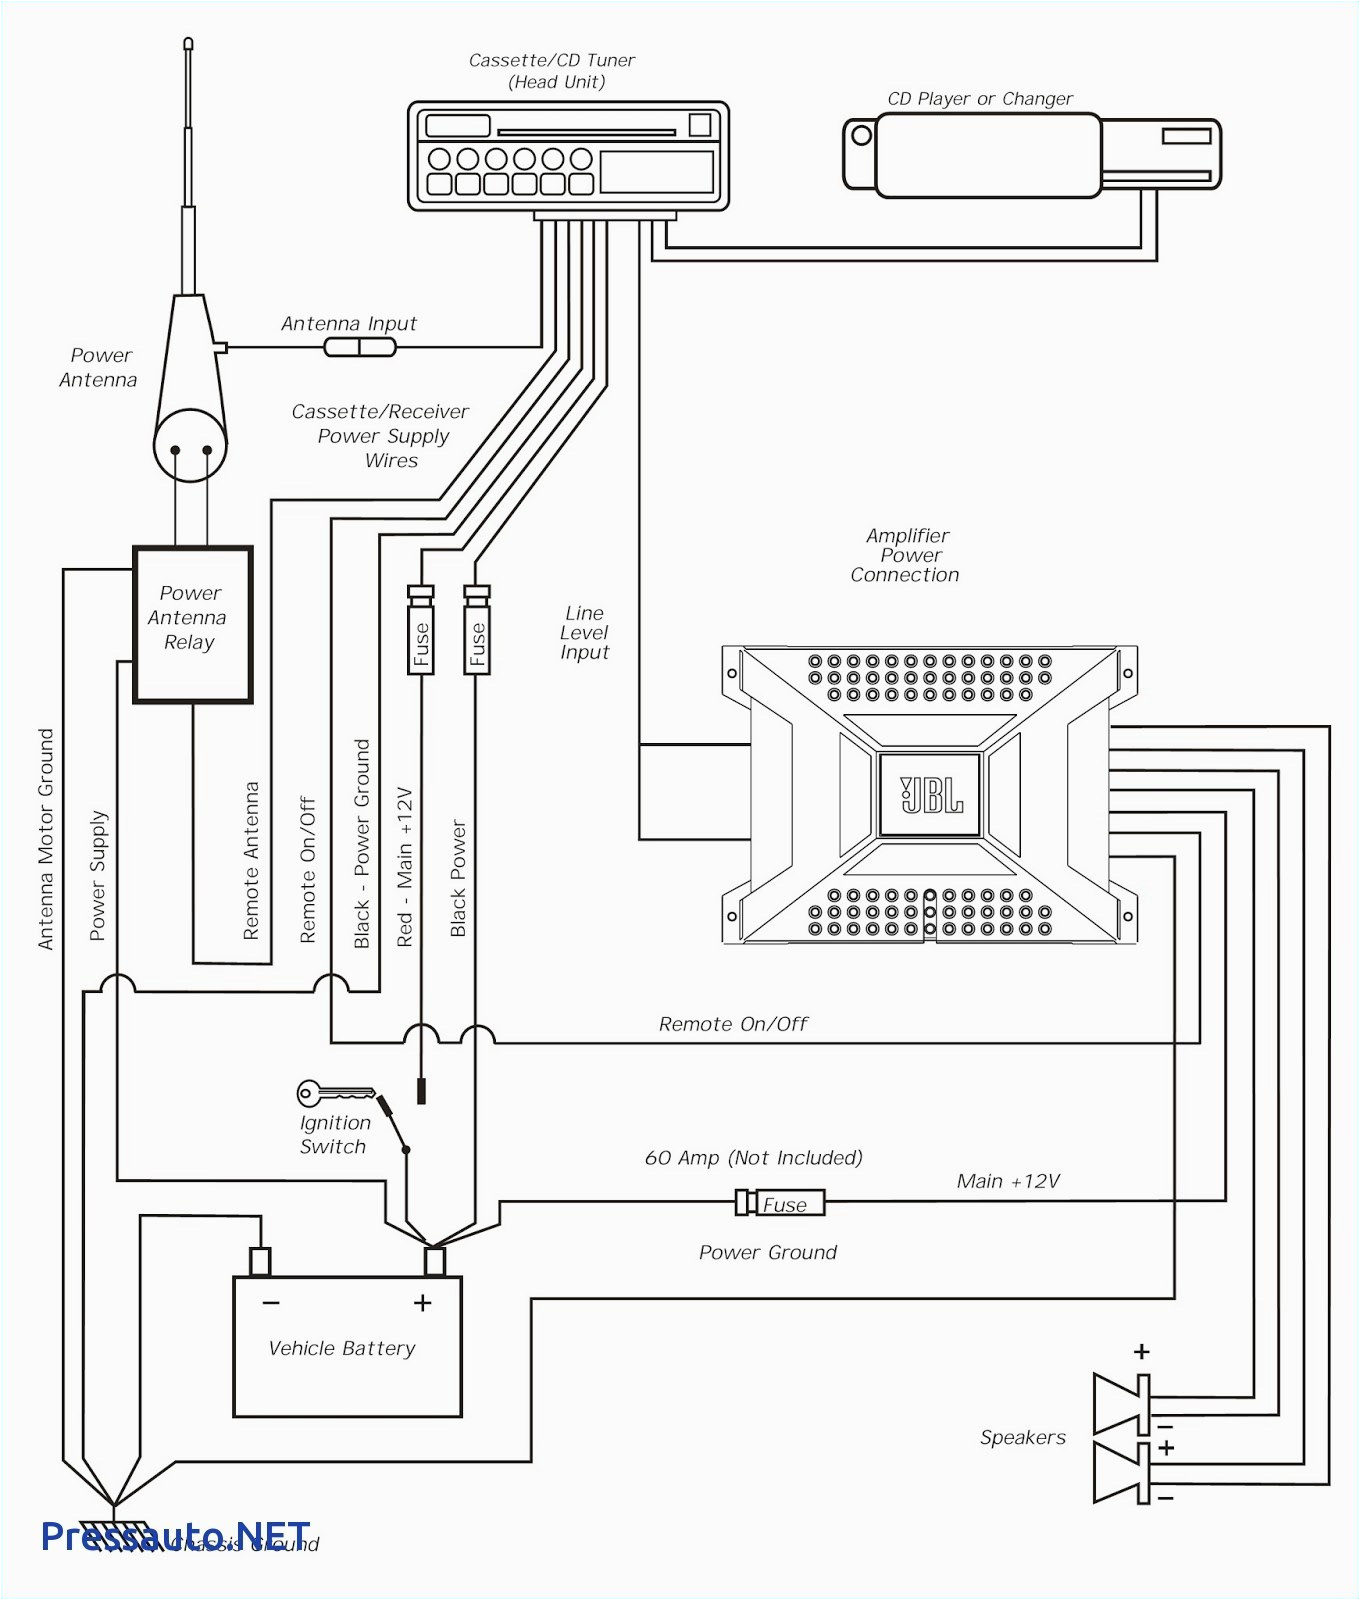 wiring diagram for cd player wiring diagram wiring diagram for a sony xplod cd player jvc